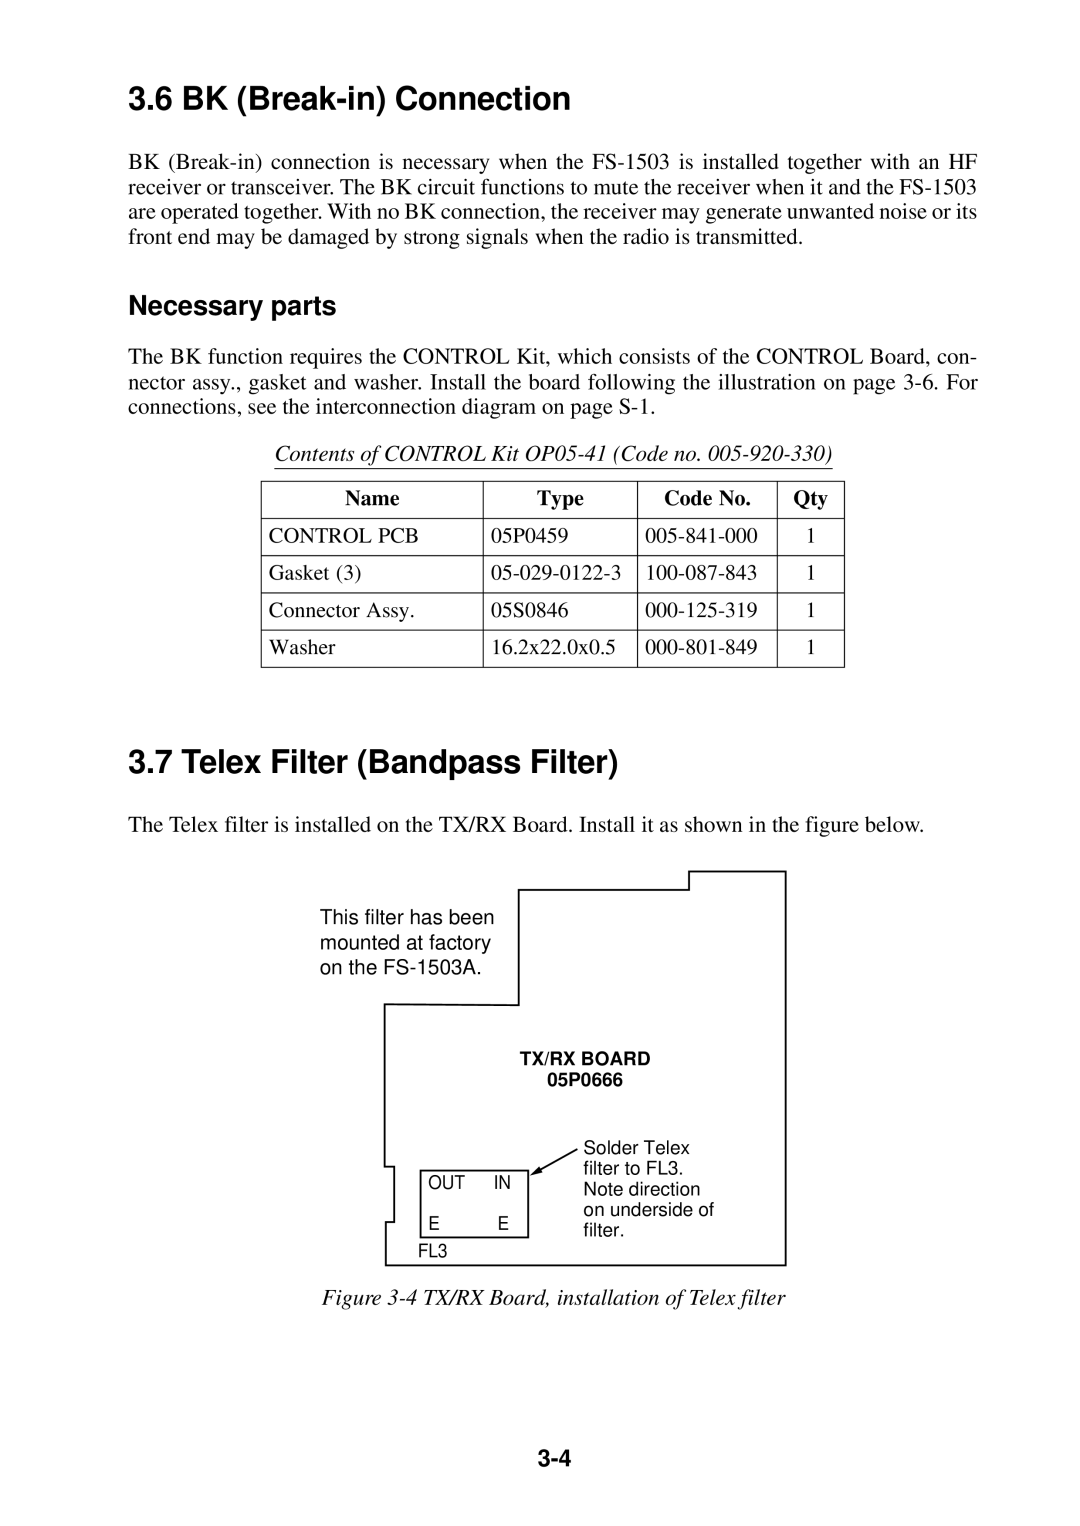 Furuno FS-1503 manual BK Break-in Connection, Telex Filter Bandpass Filter 